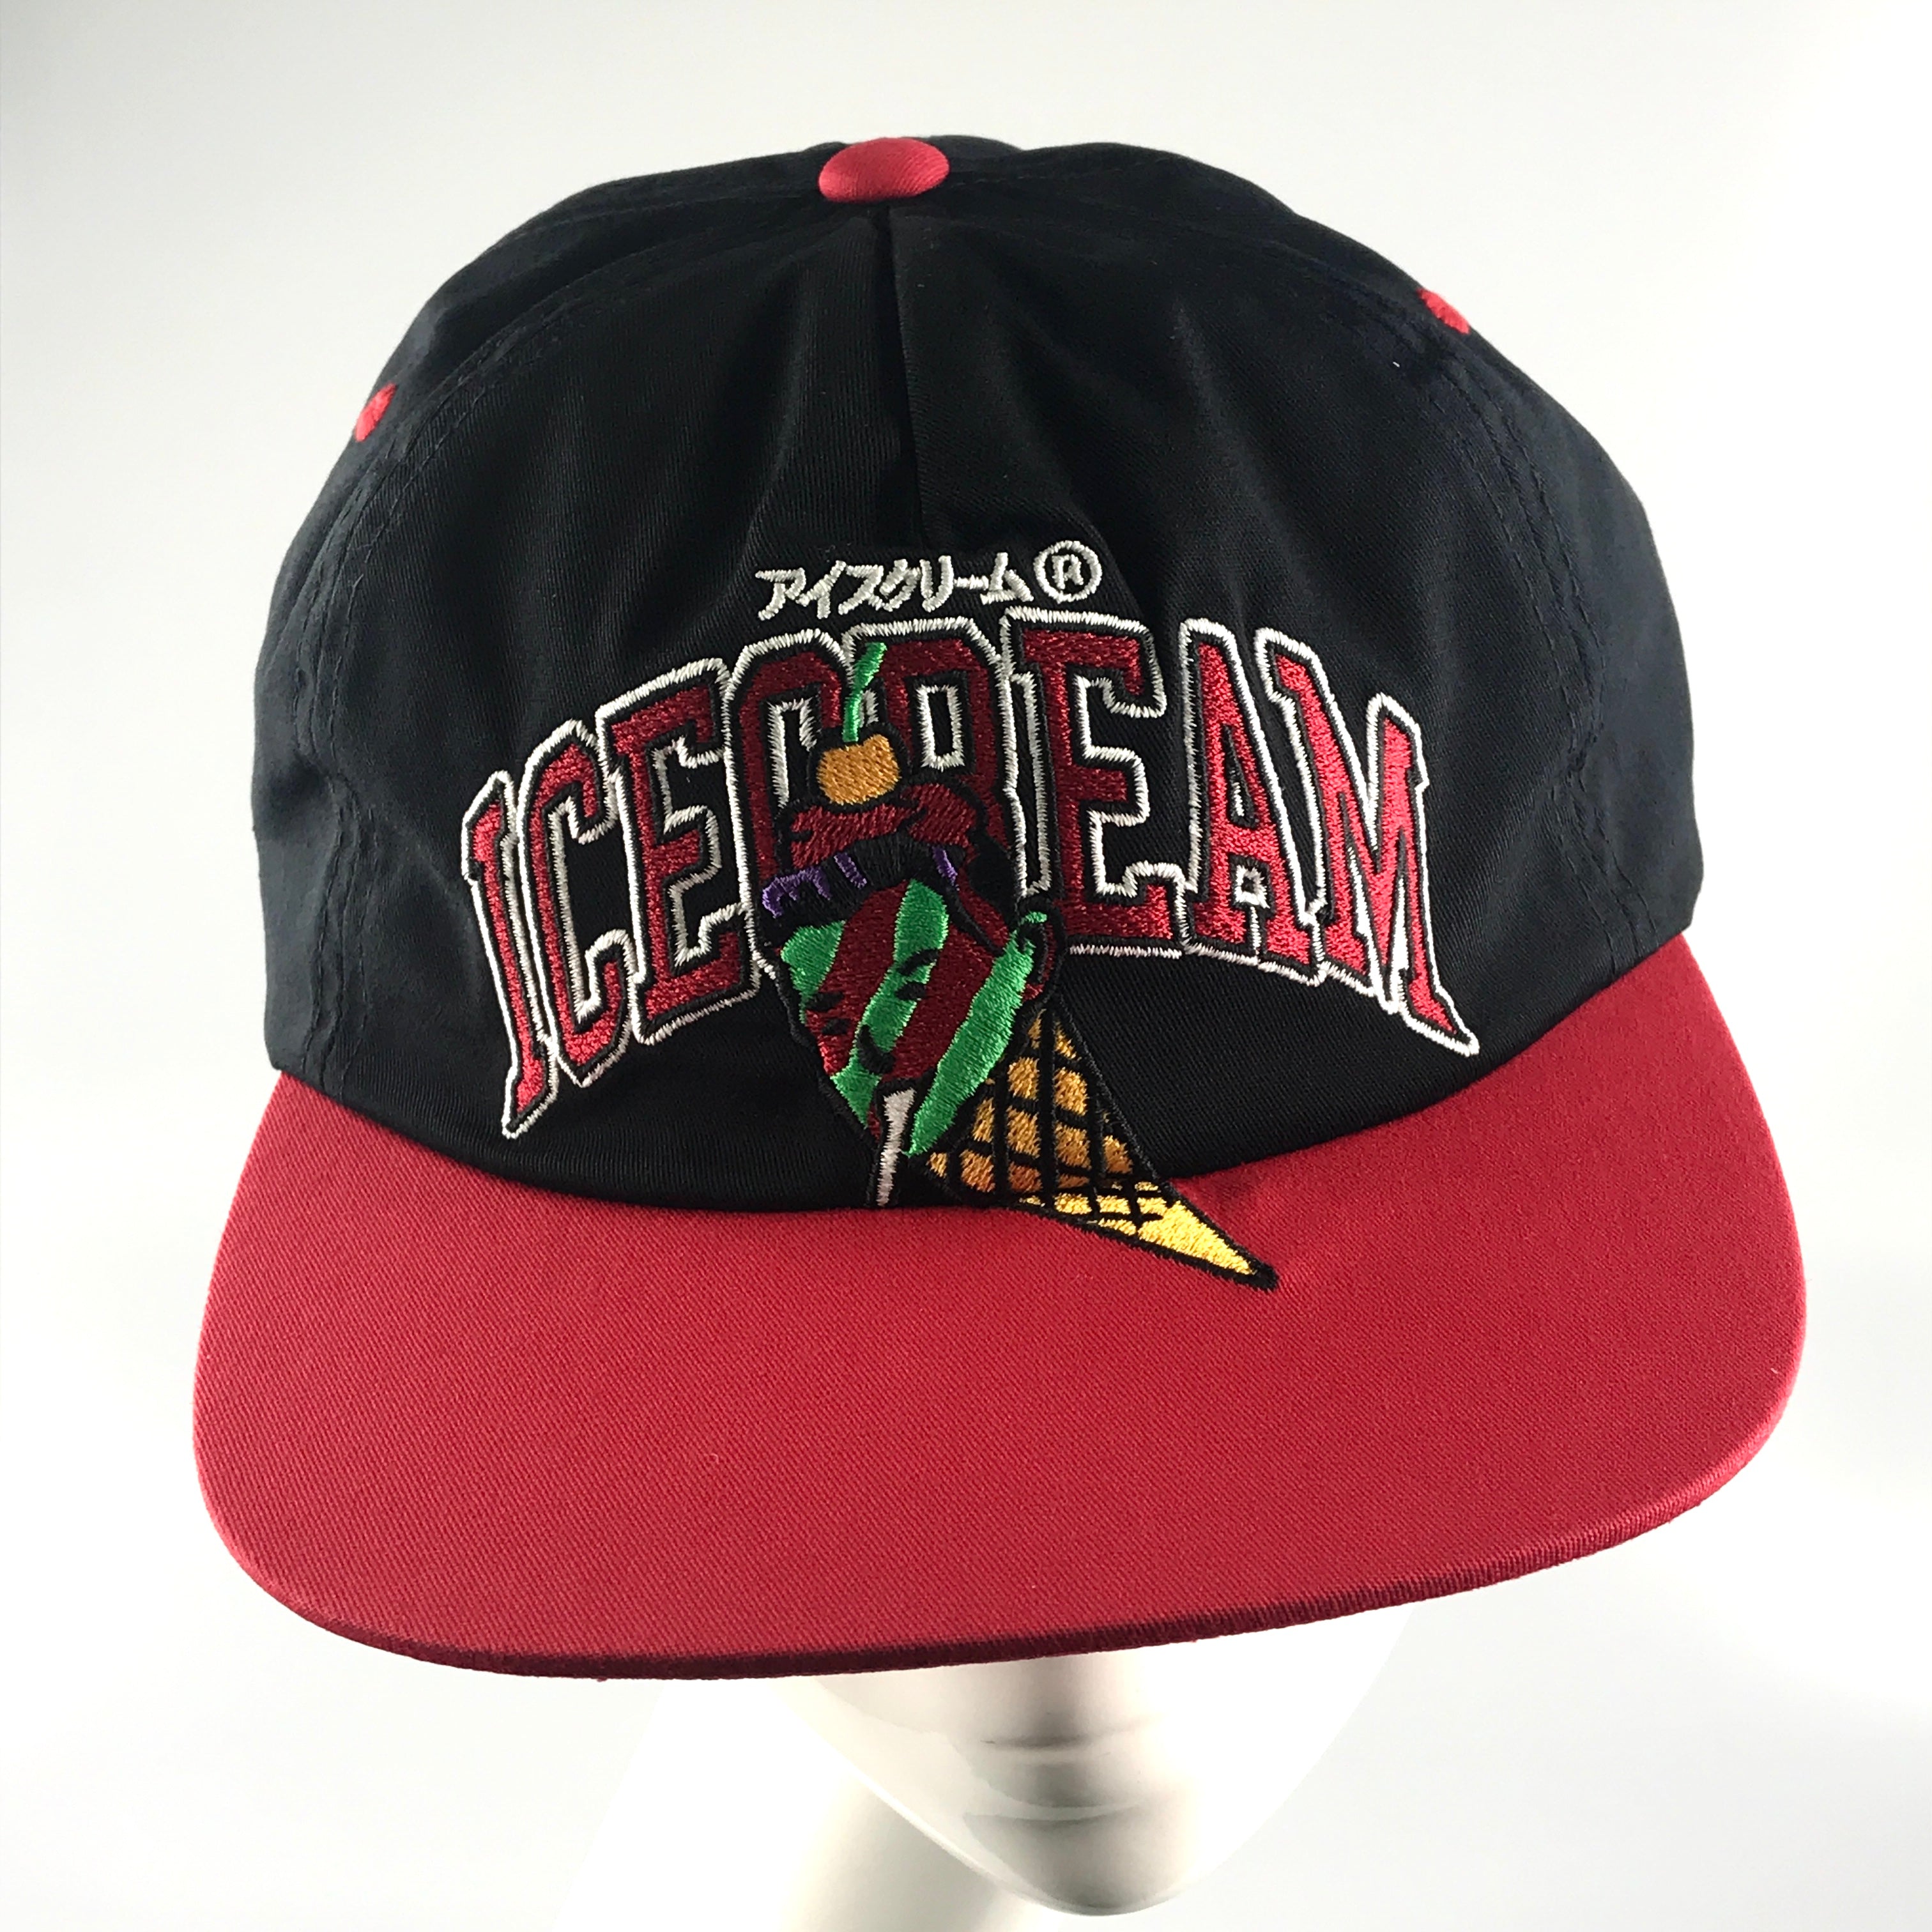 Icecream Basket snapback hat in black